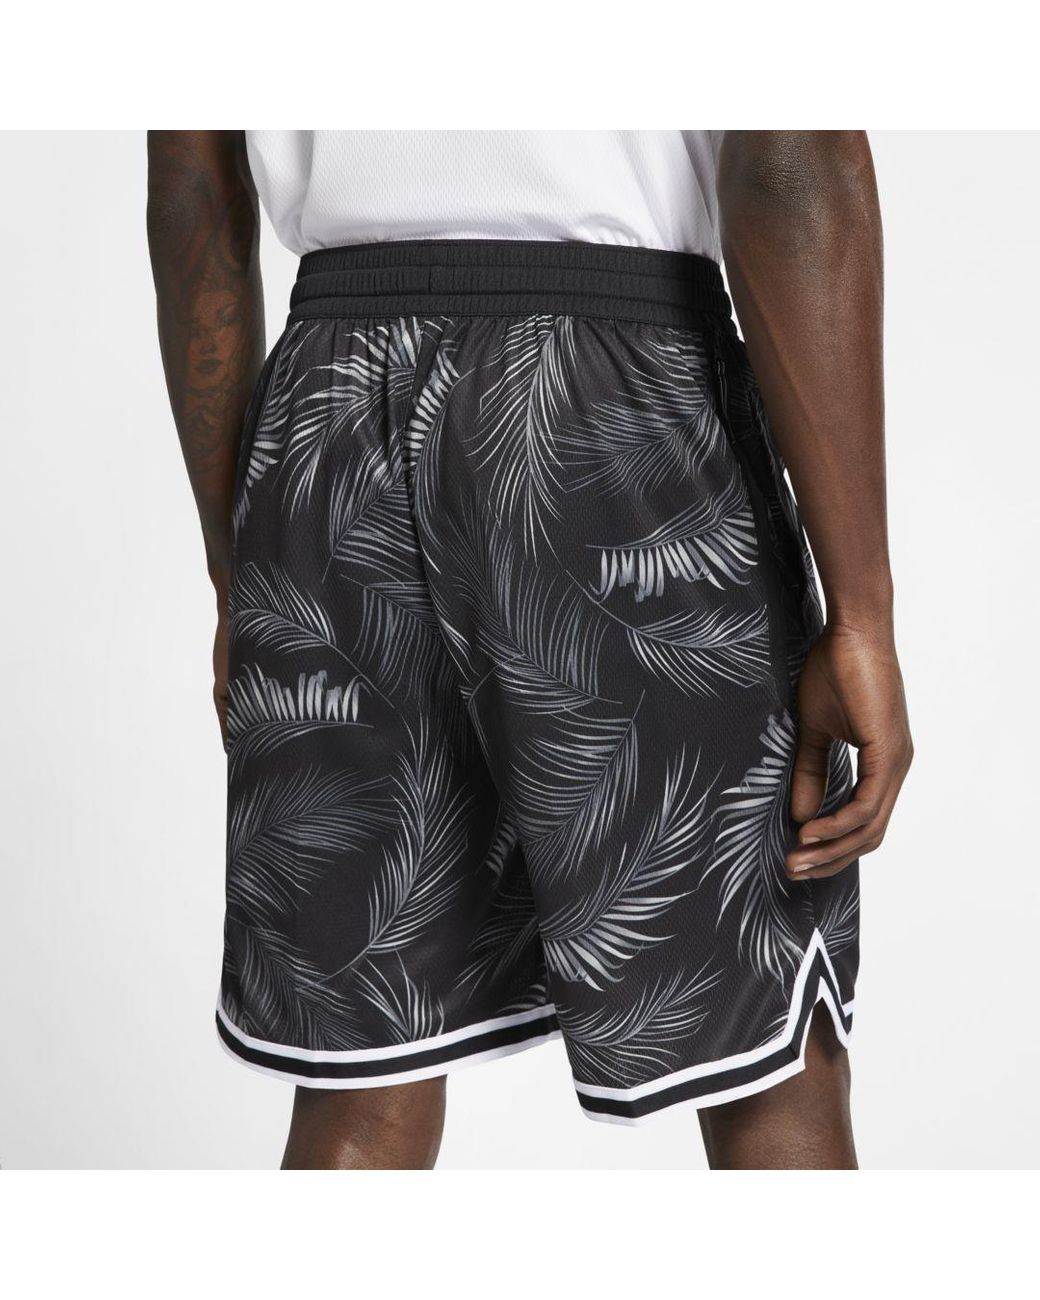 Nike Dri-FIT DNA Men's 8 Basketball Shorts.